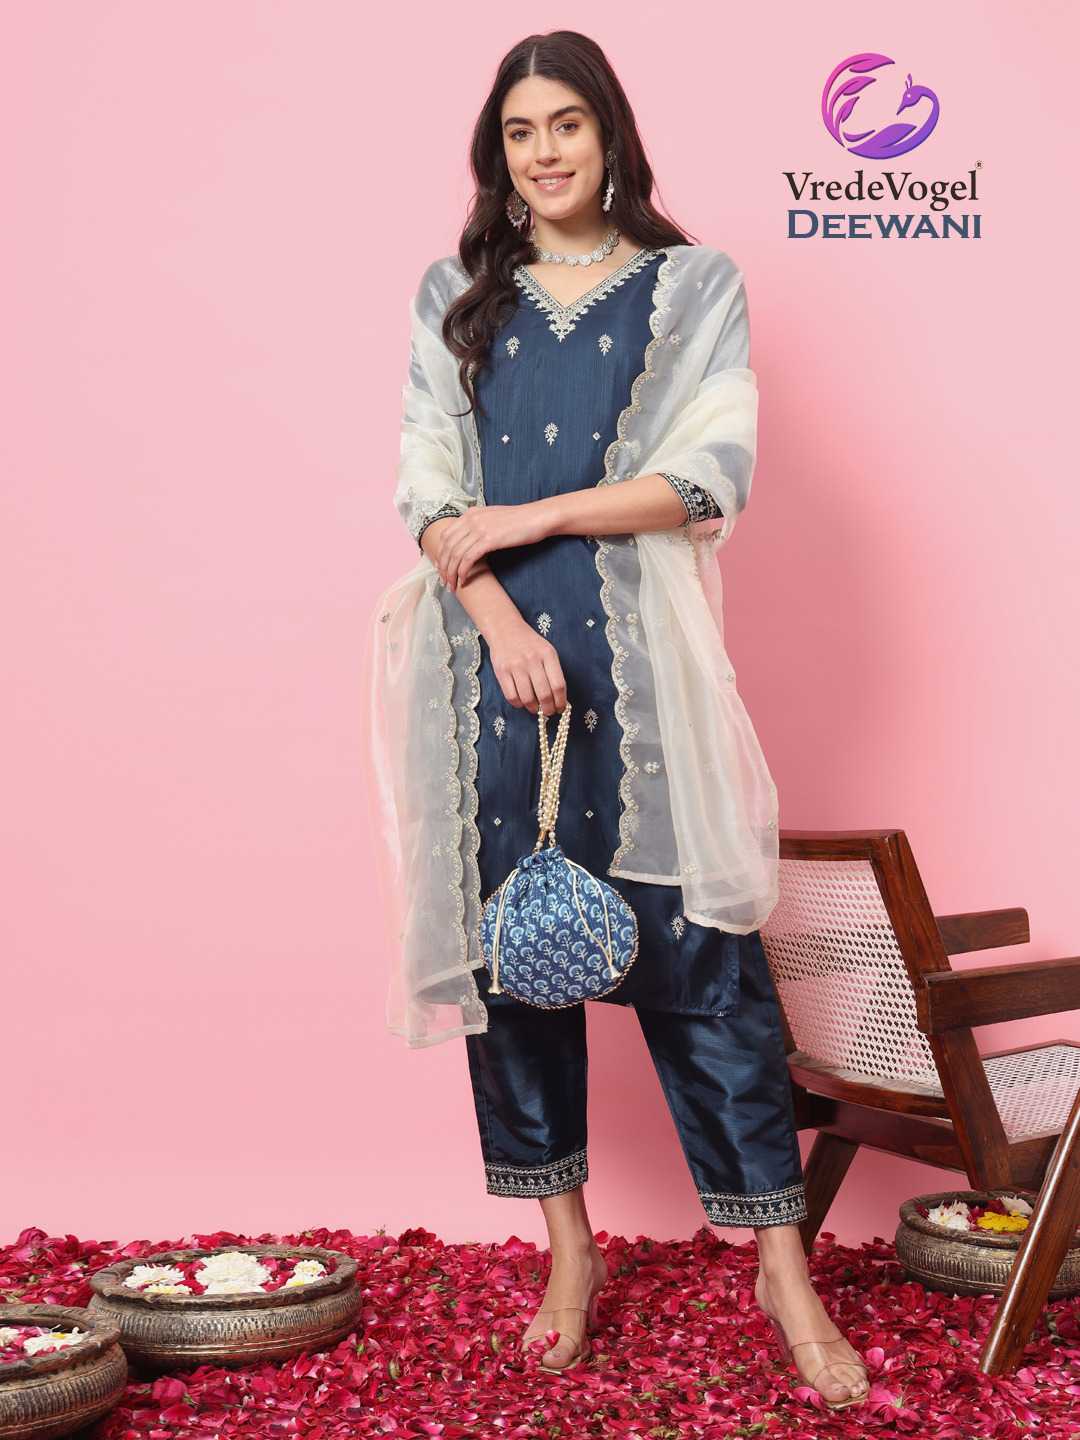 vredevogel presents deewani function style organza full stitch salwar suit